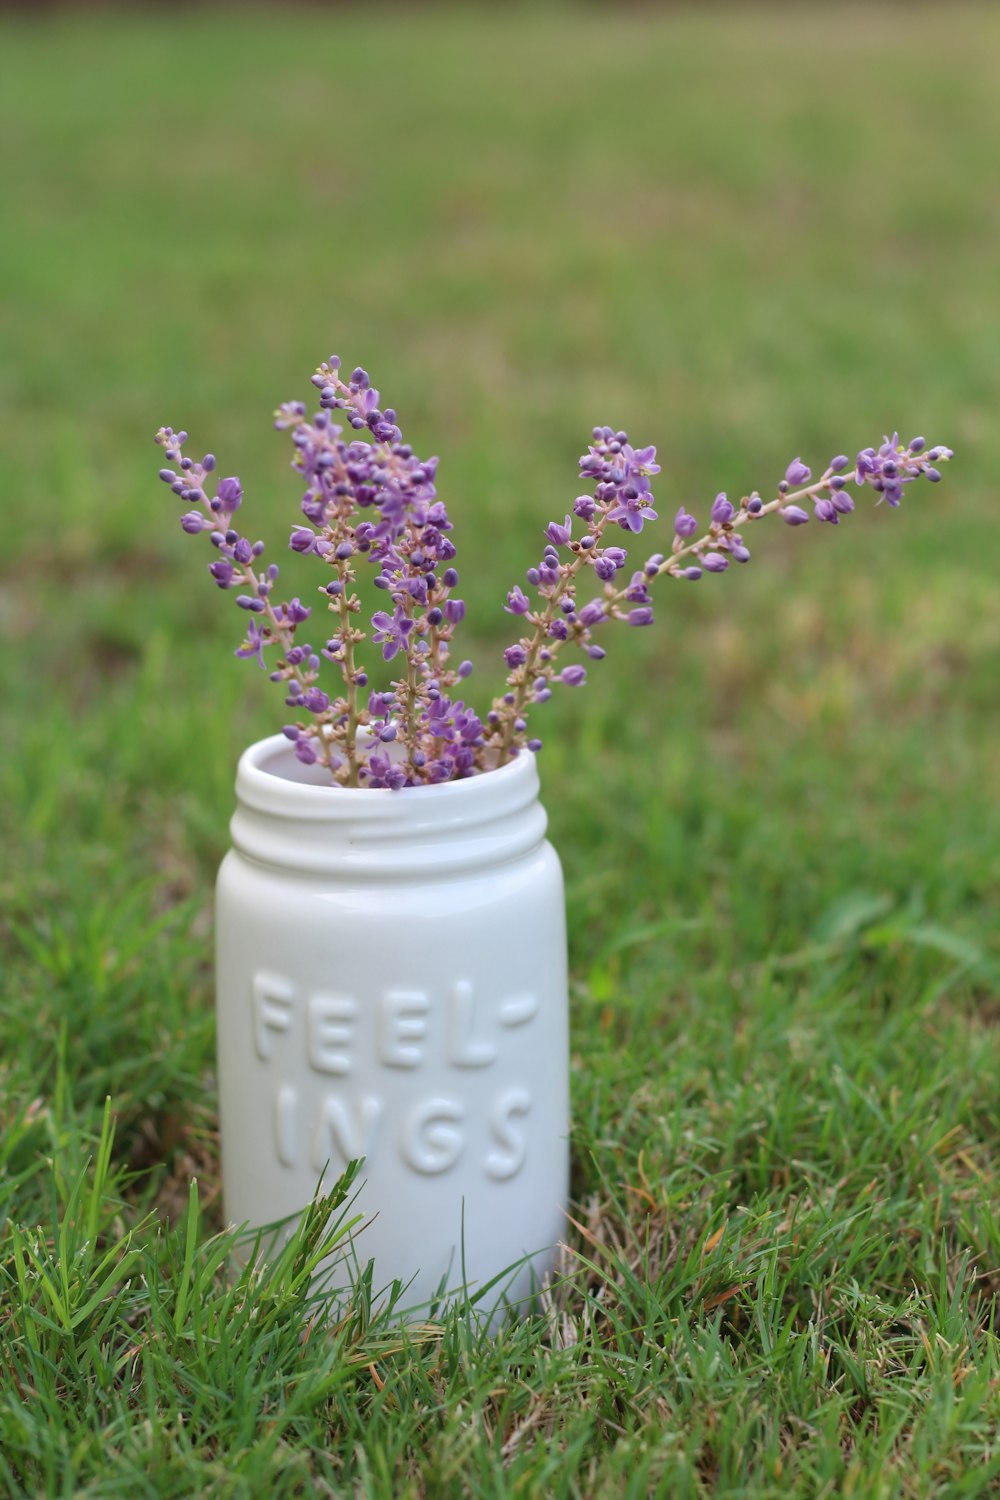 purple flowers in white ceramic vase on green grass during daytime